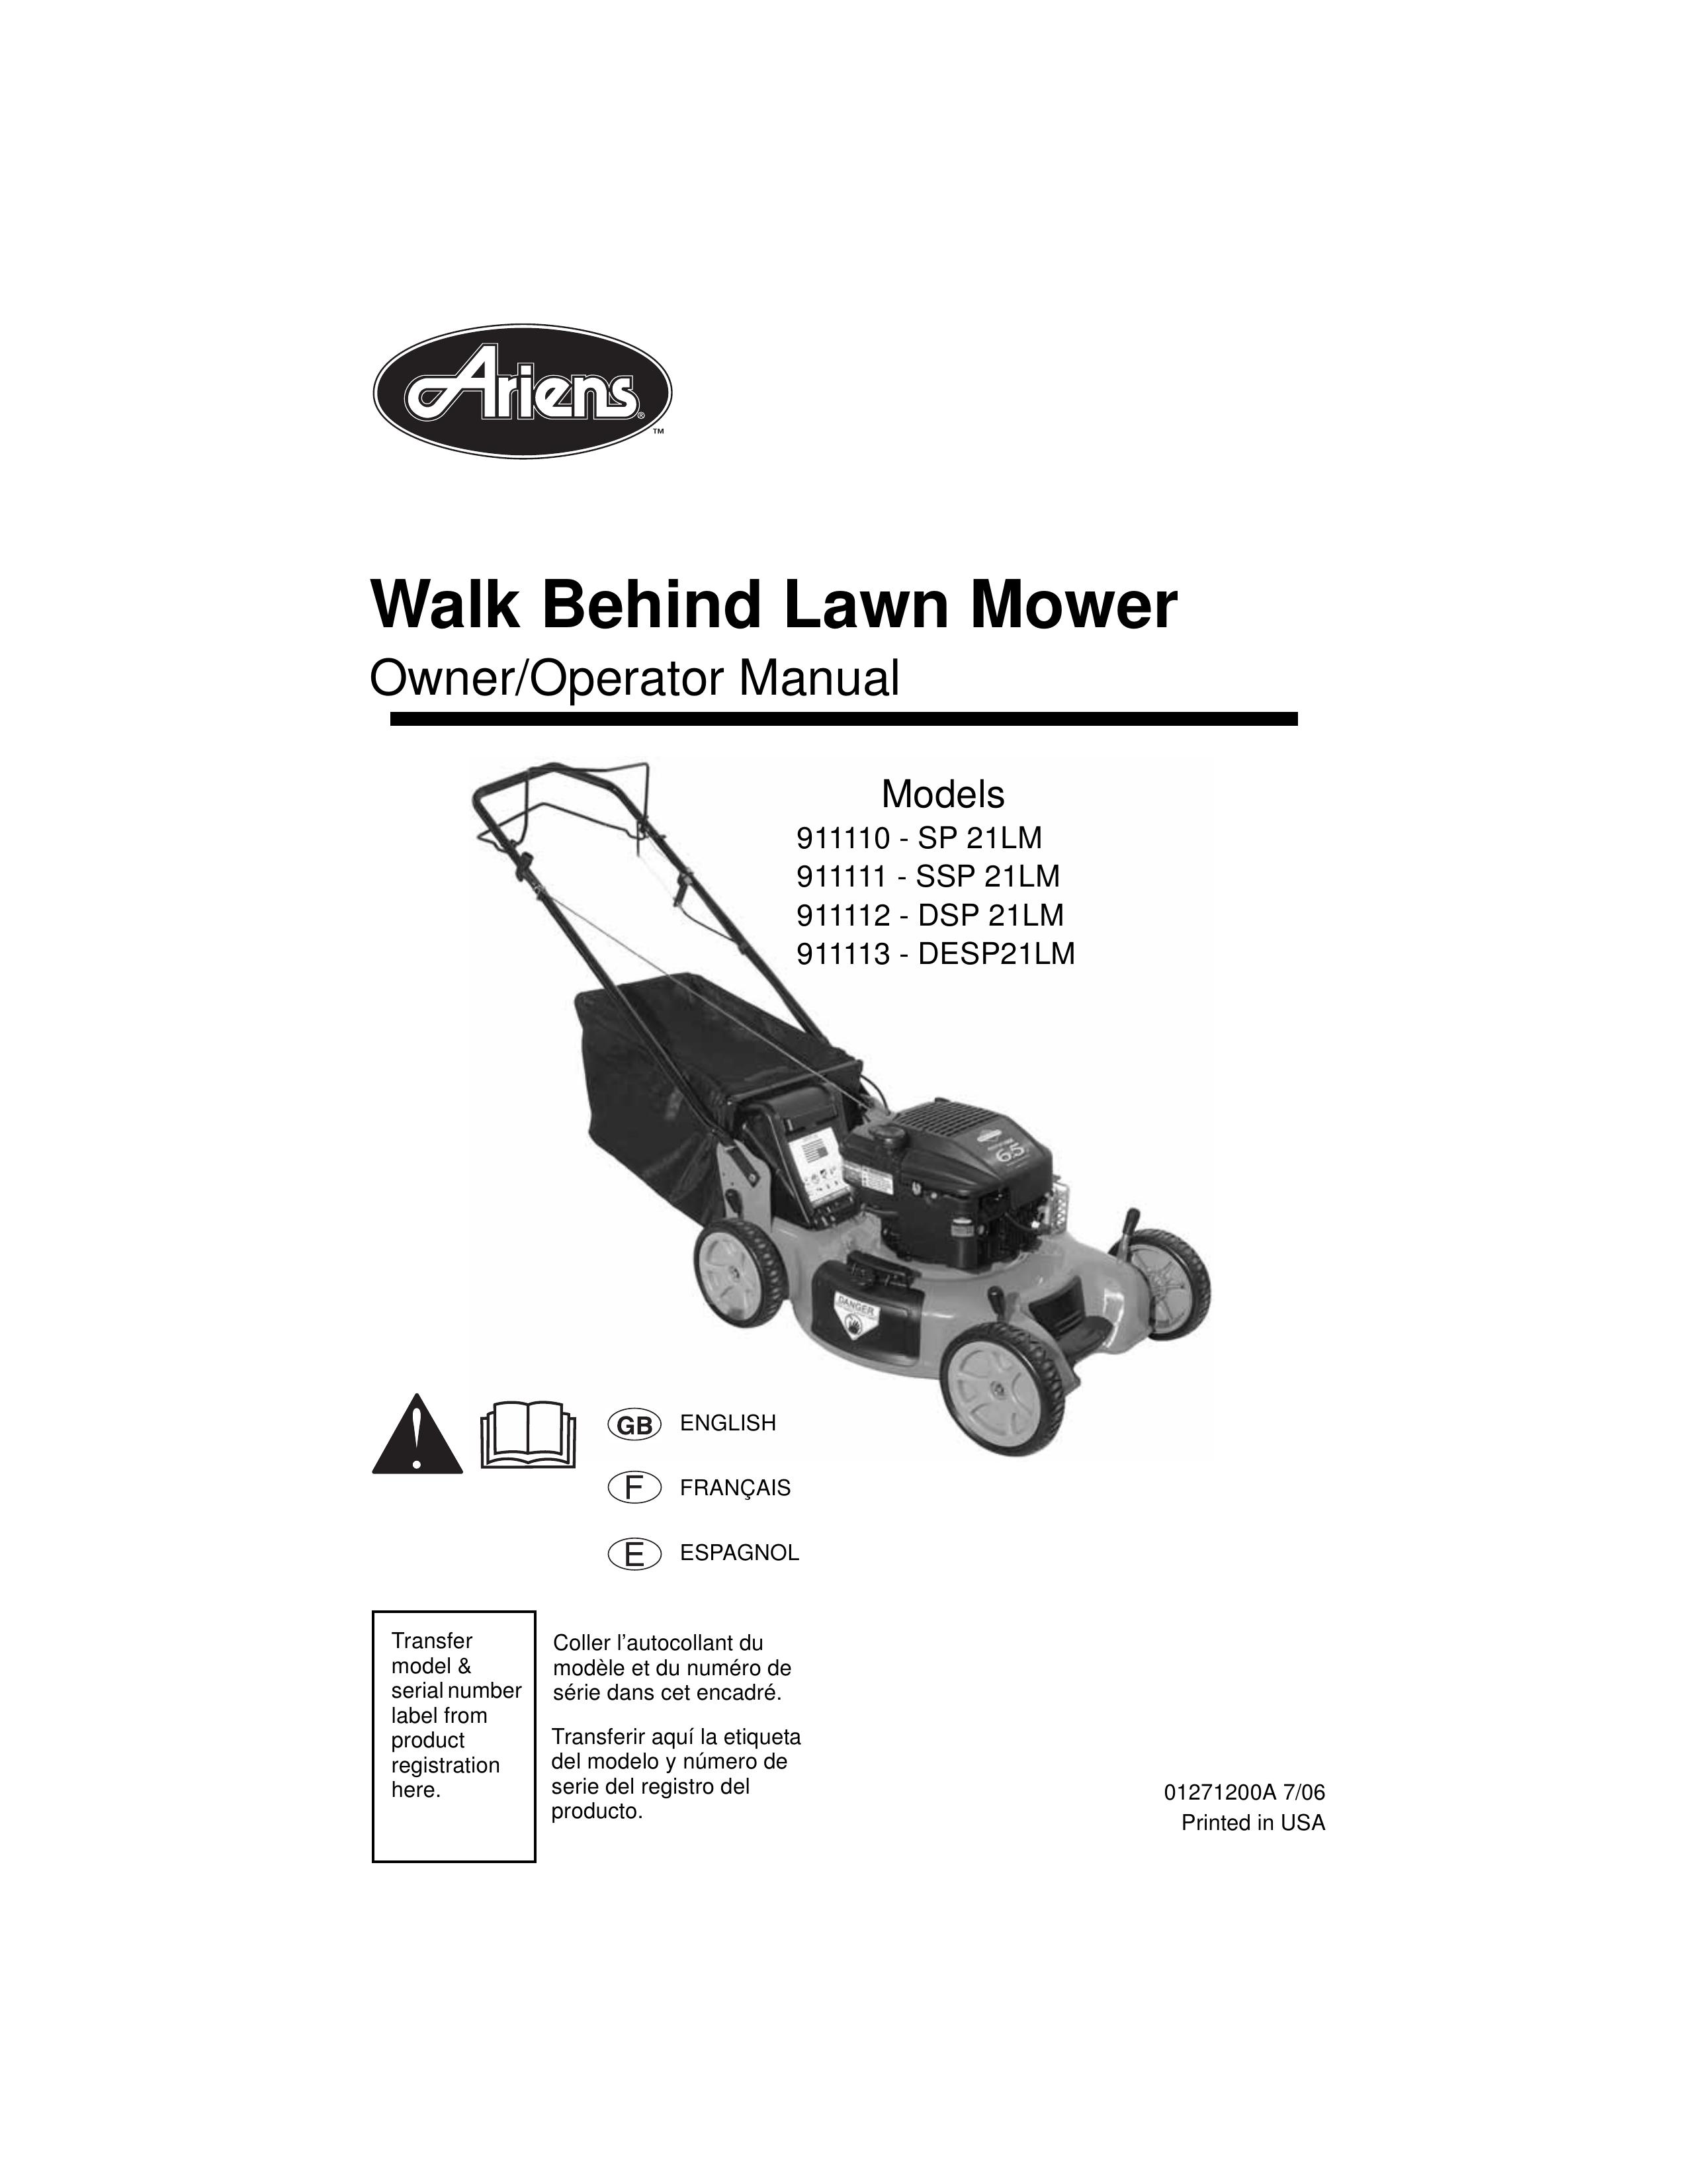 Ariens 911112 - DSP 21LM Lawn Mower User Manual